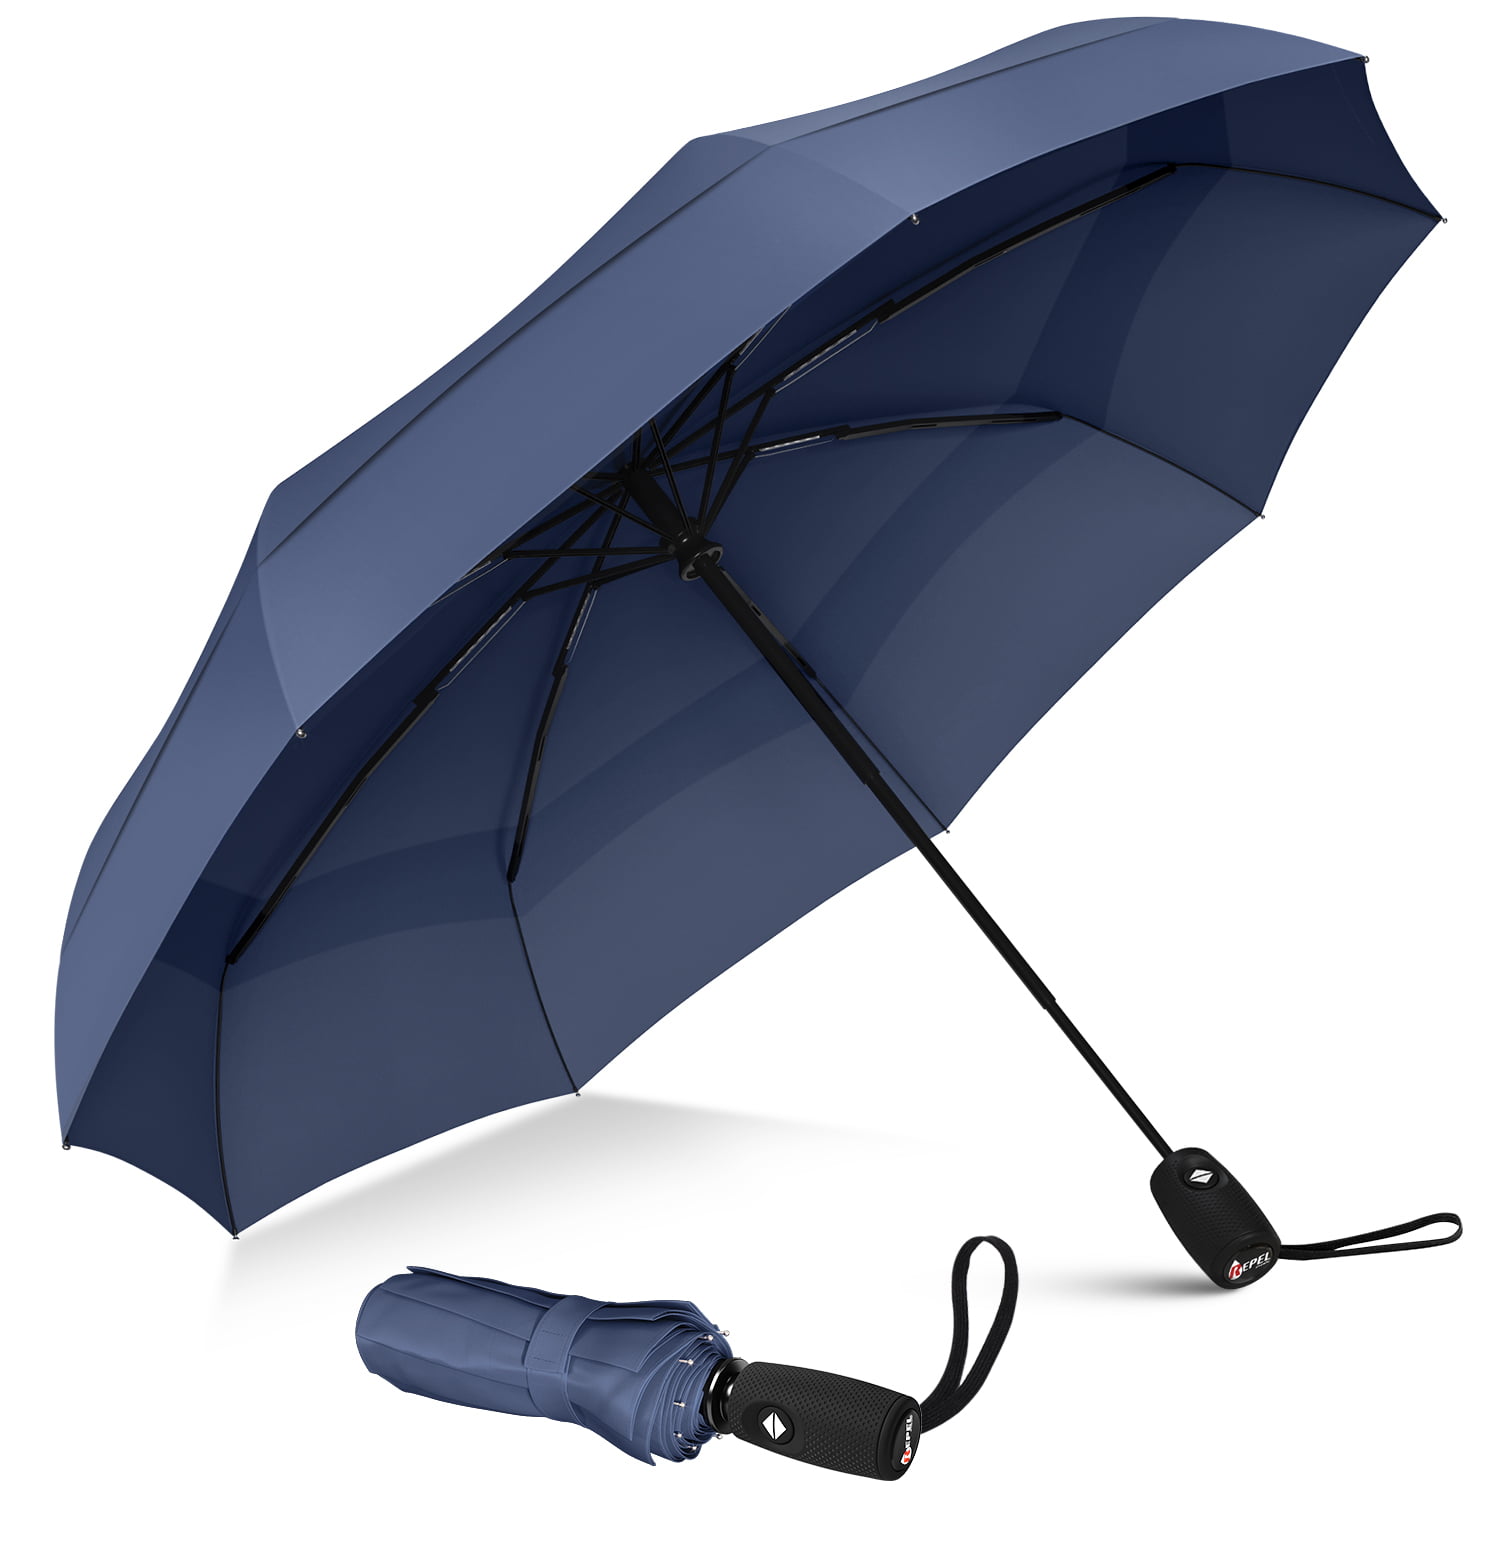 Big Straight Umbrella with C-Shaped Handle,blue sky ABCCANOPY Inverted Umbrella,Double Layer Reverse Rain&Wind Teflon Repellent Umbrella for Car and Outdoor Use Windproof UPF 50 